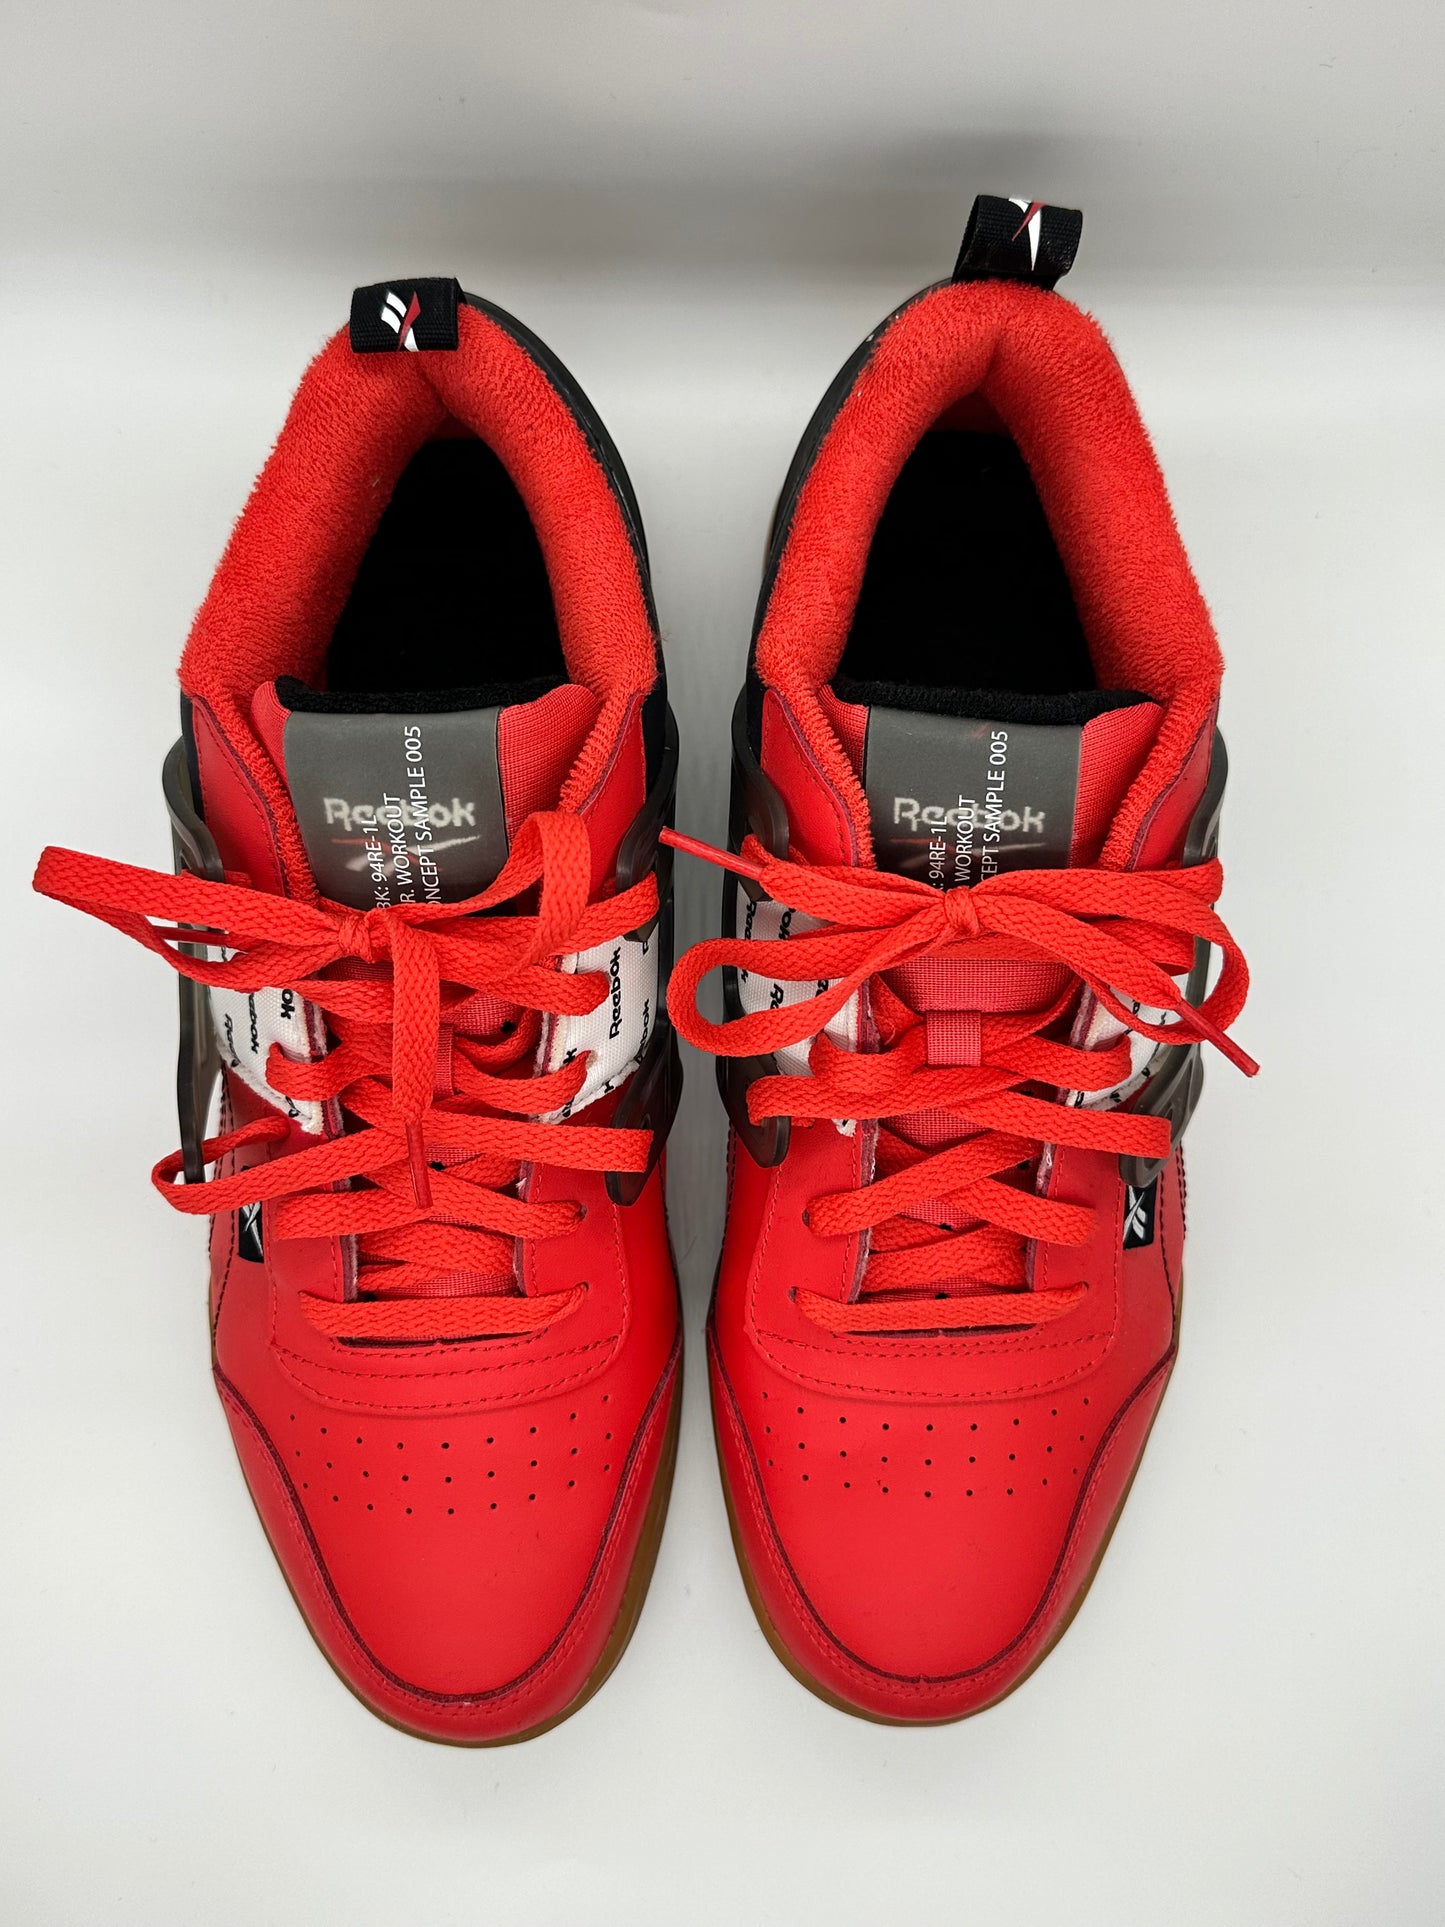 Reebok Men's Red Sneakers